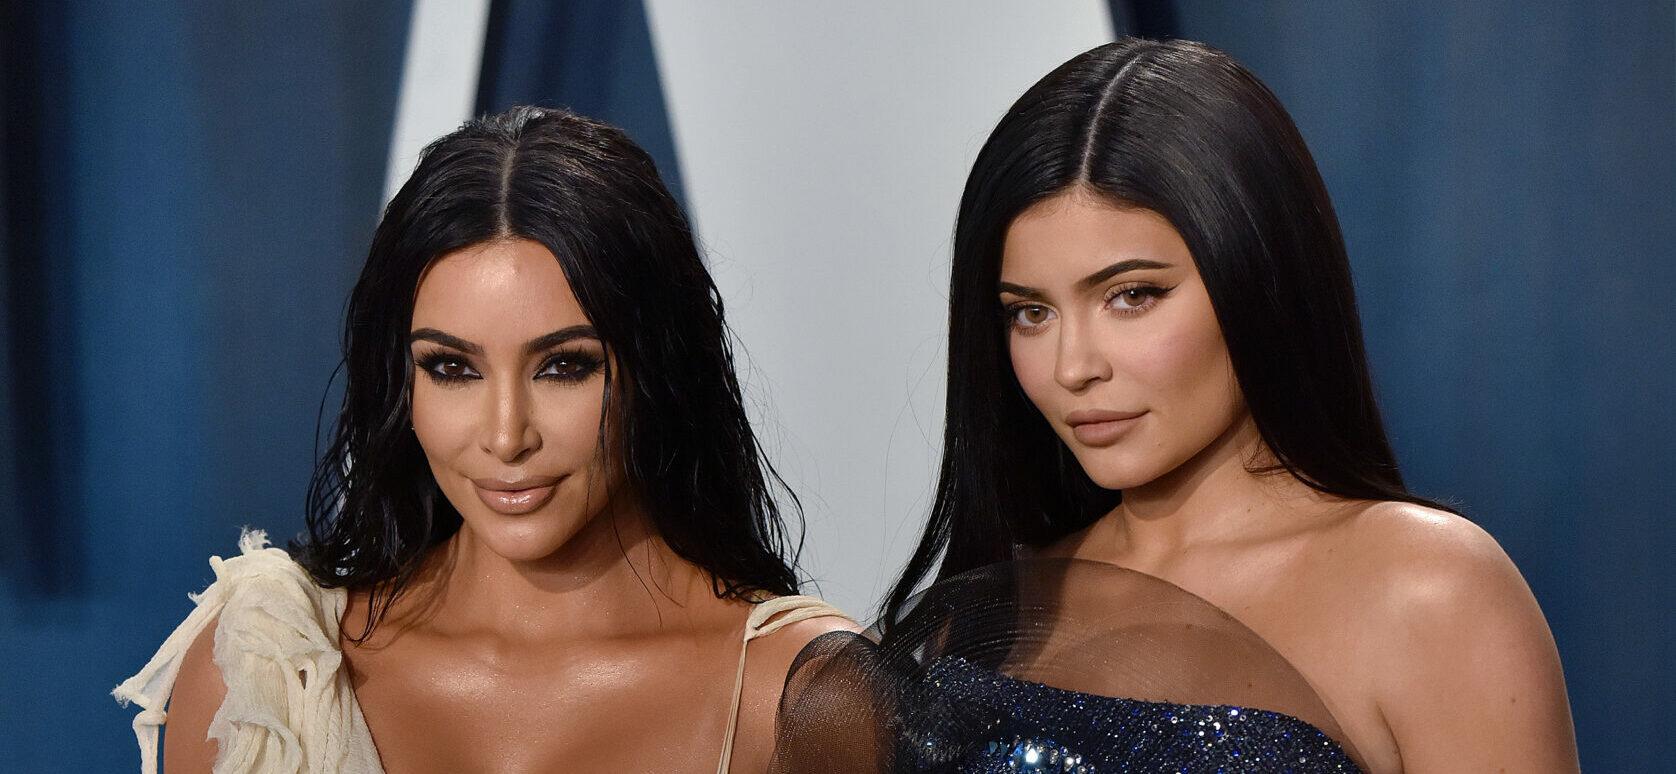 Kim Kardashian and Kylie Jenner attend Vanity Fair Oscar party